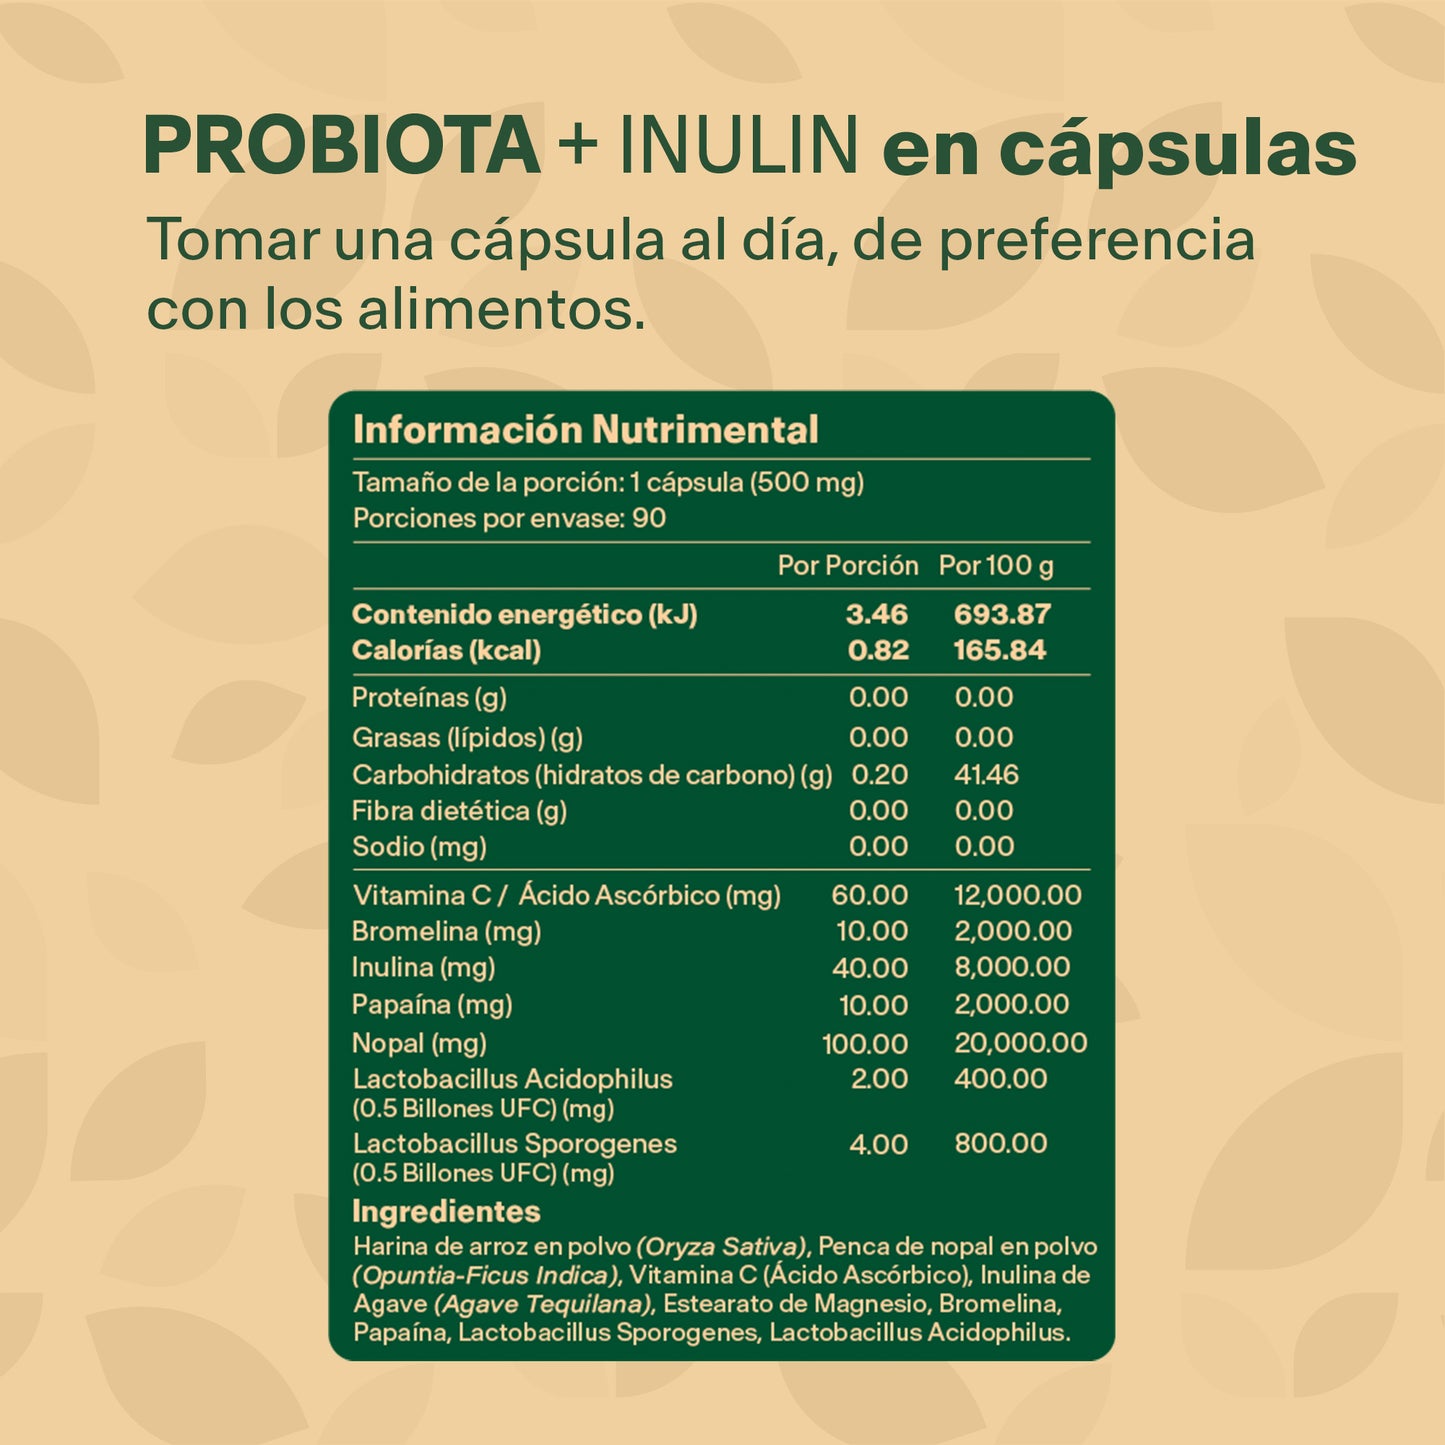 PROBIOTA + INULIN | Probióticos 60 Billion CFU